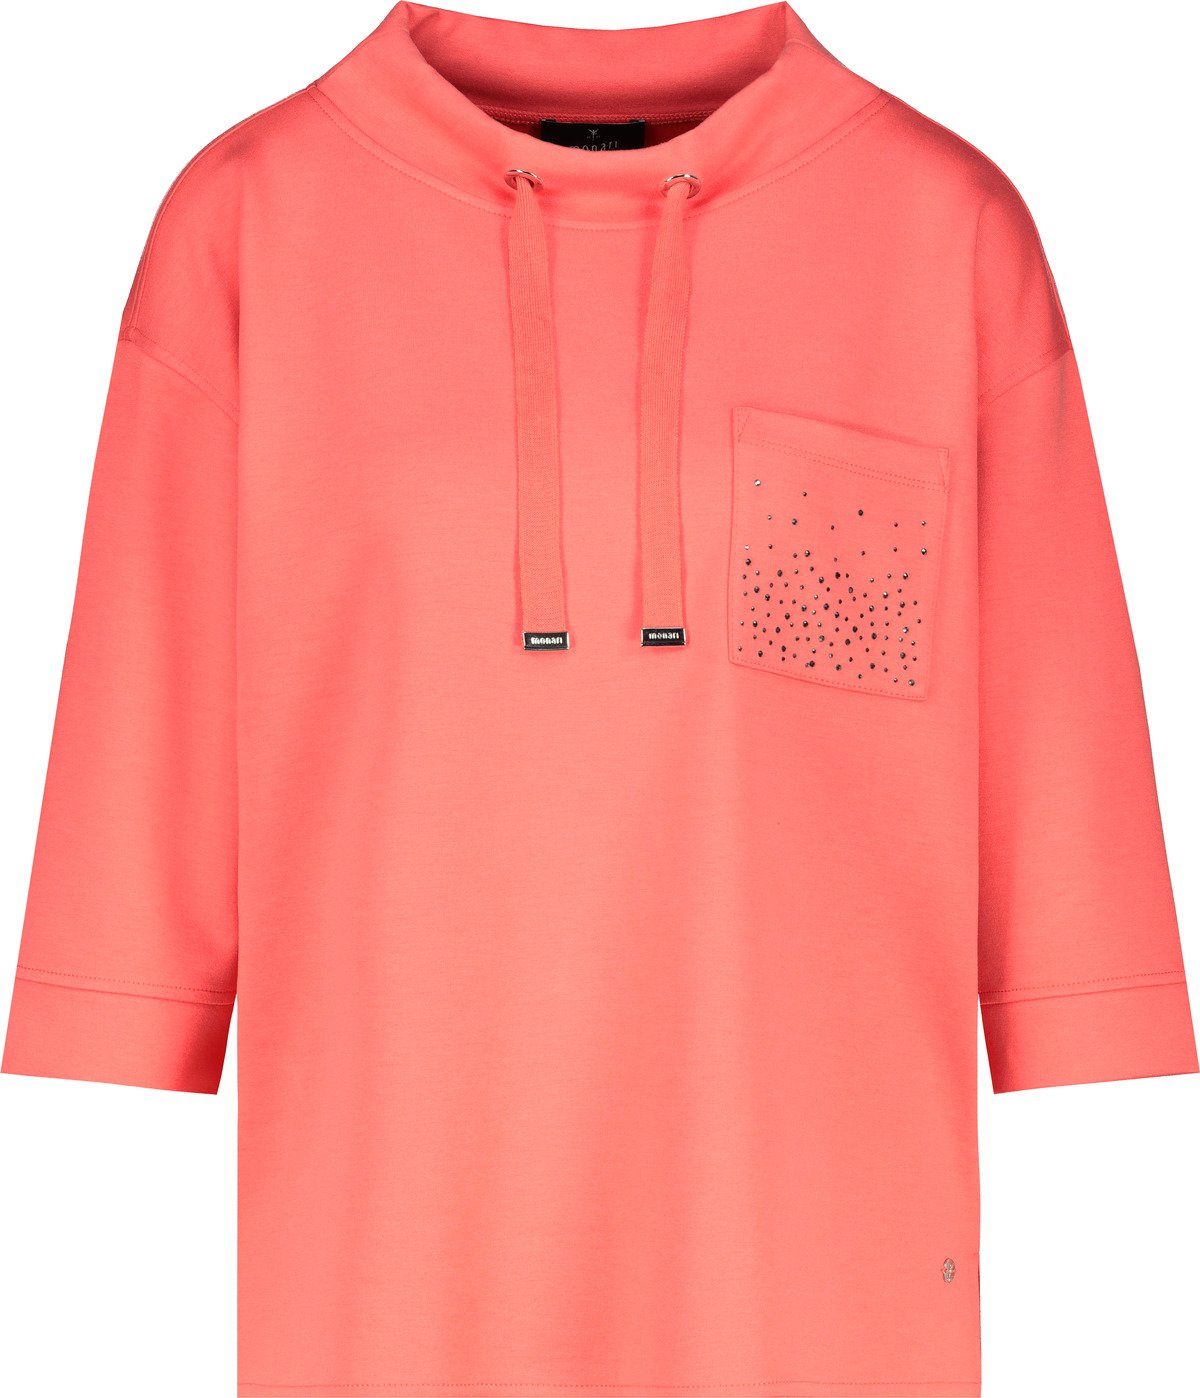 Sweatshirt (Bright Coral)